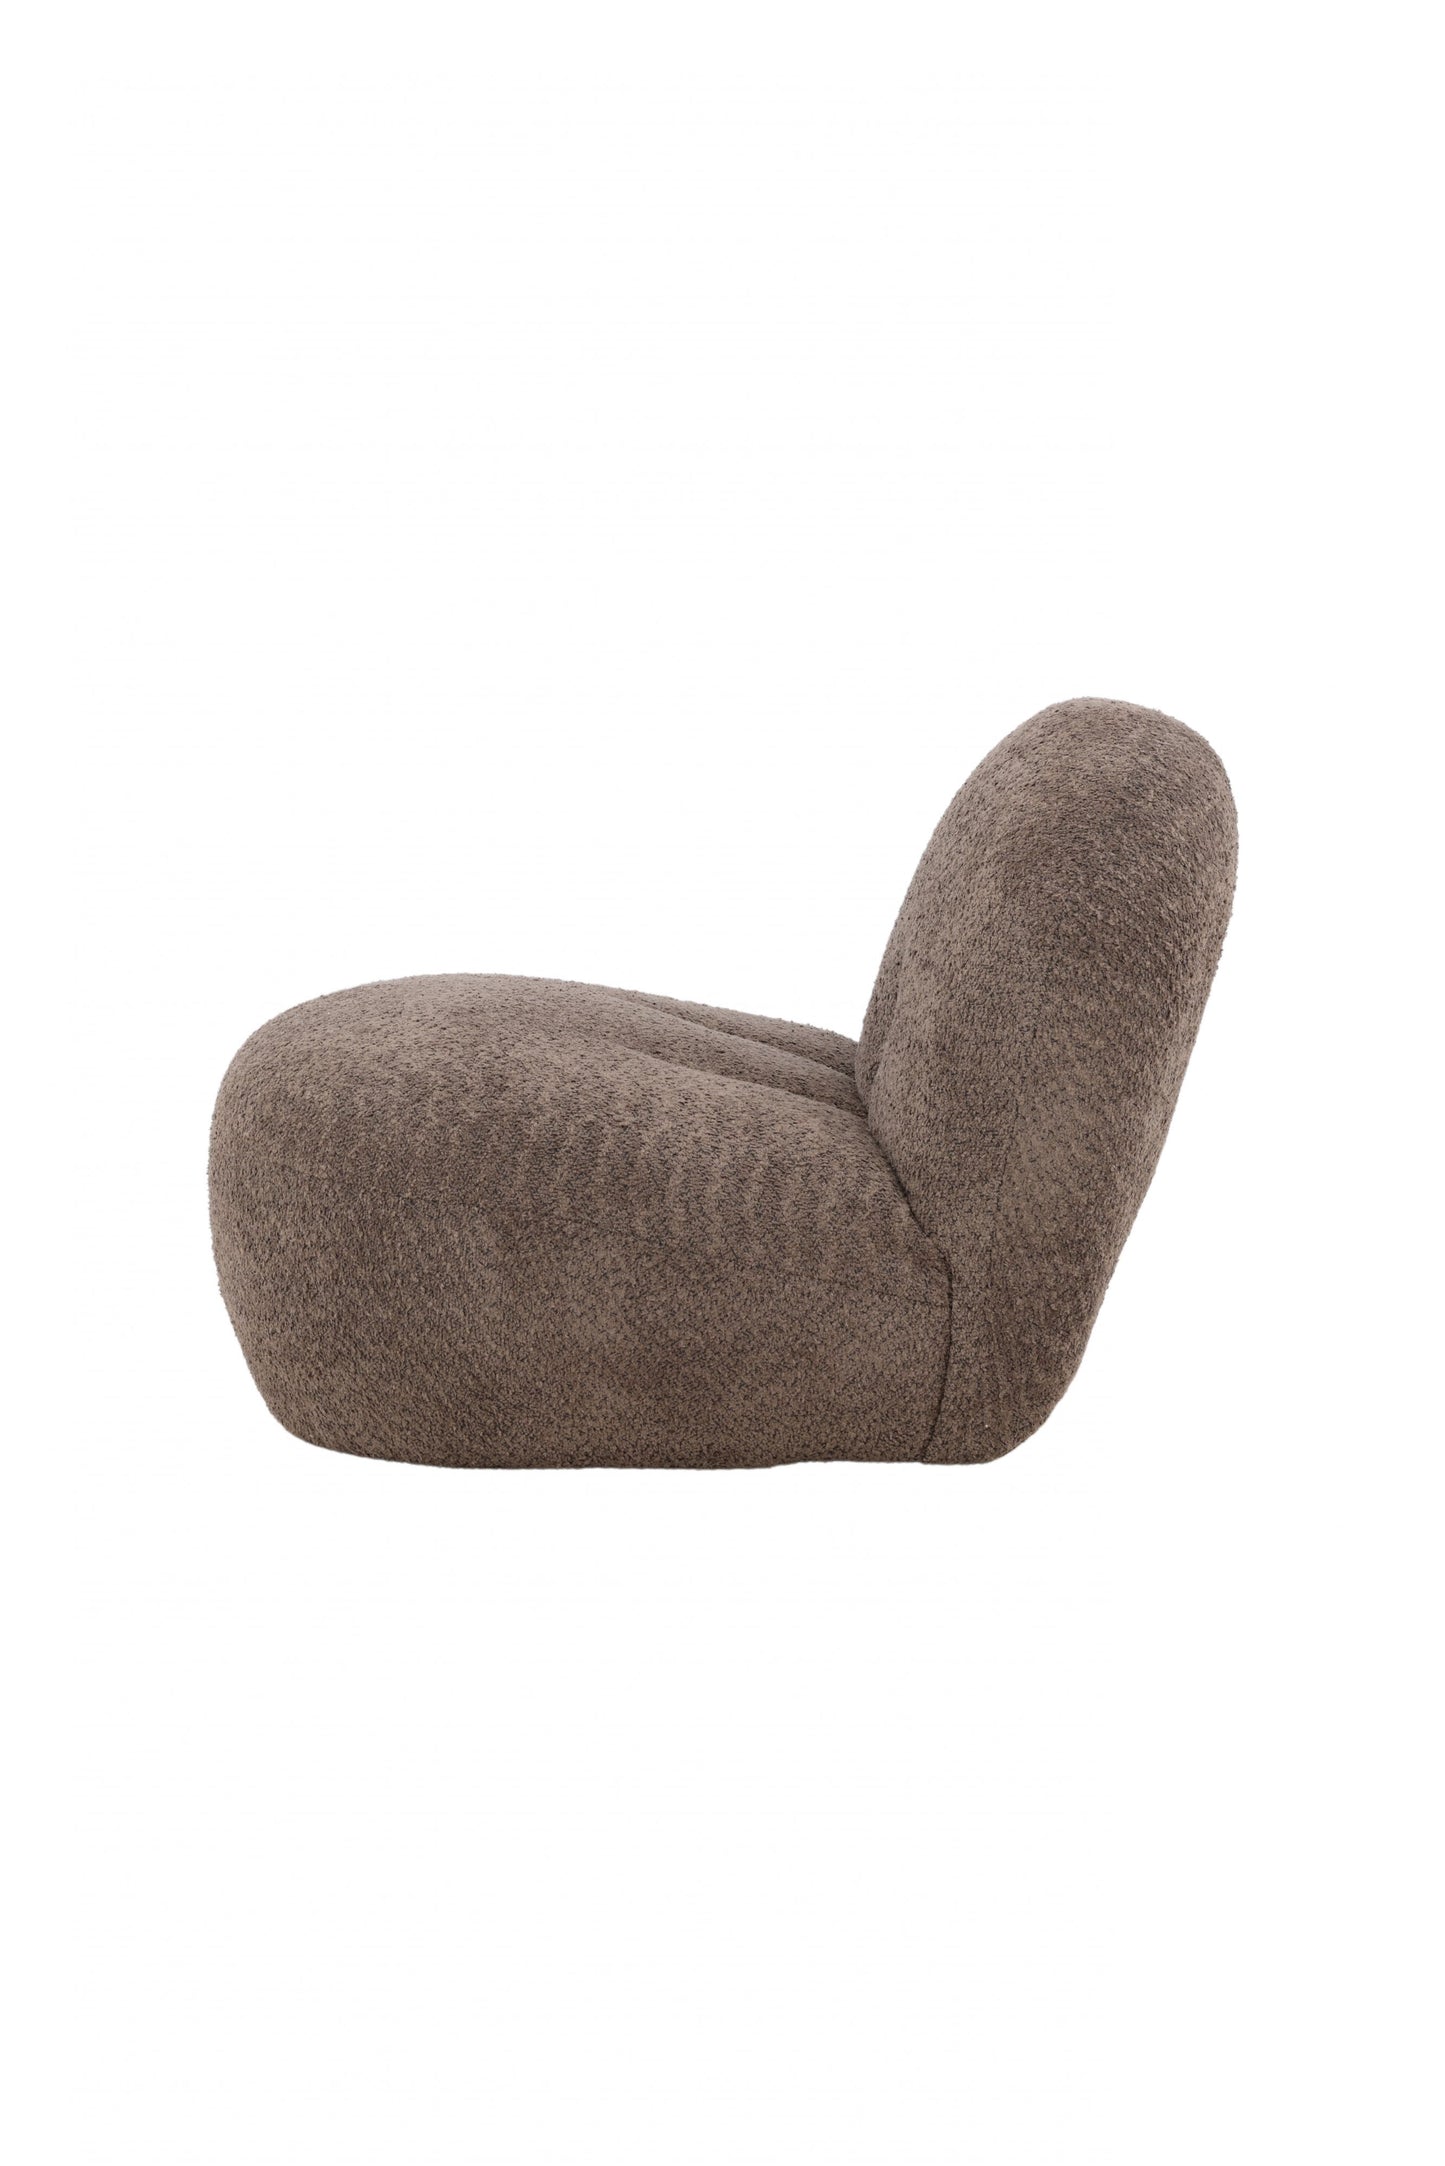 Venture Design | Omaha Lounge Chair - Grey Boucle